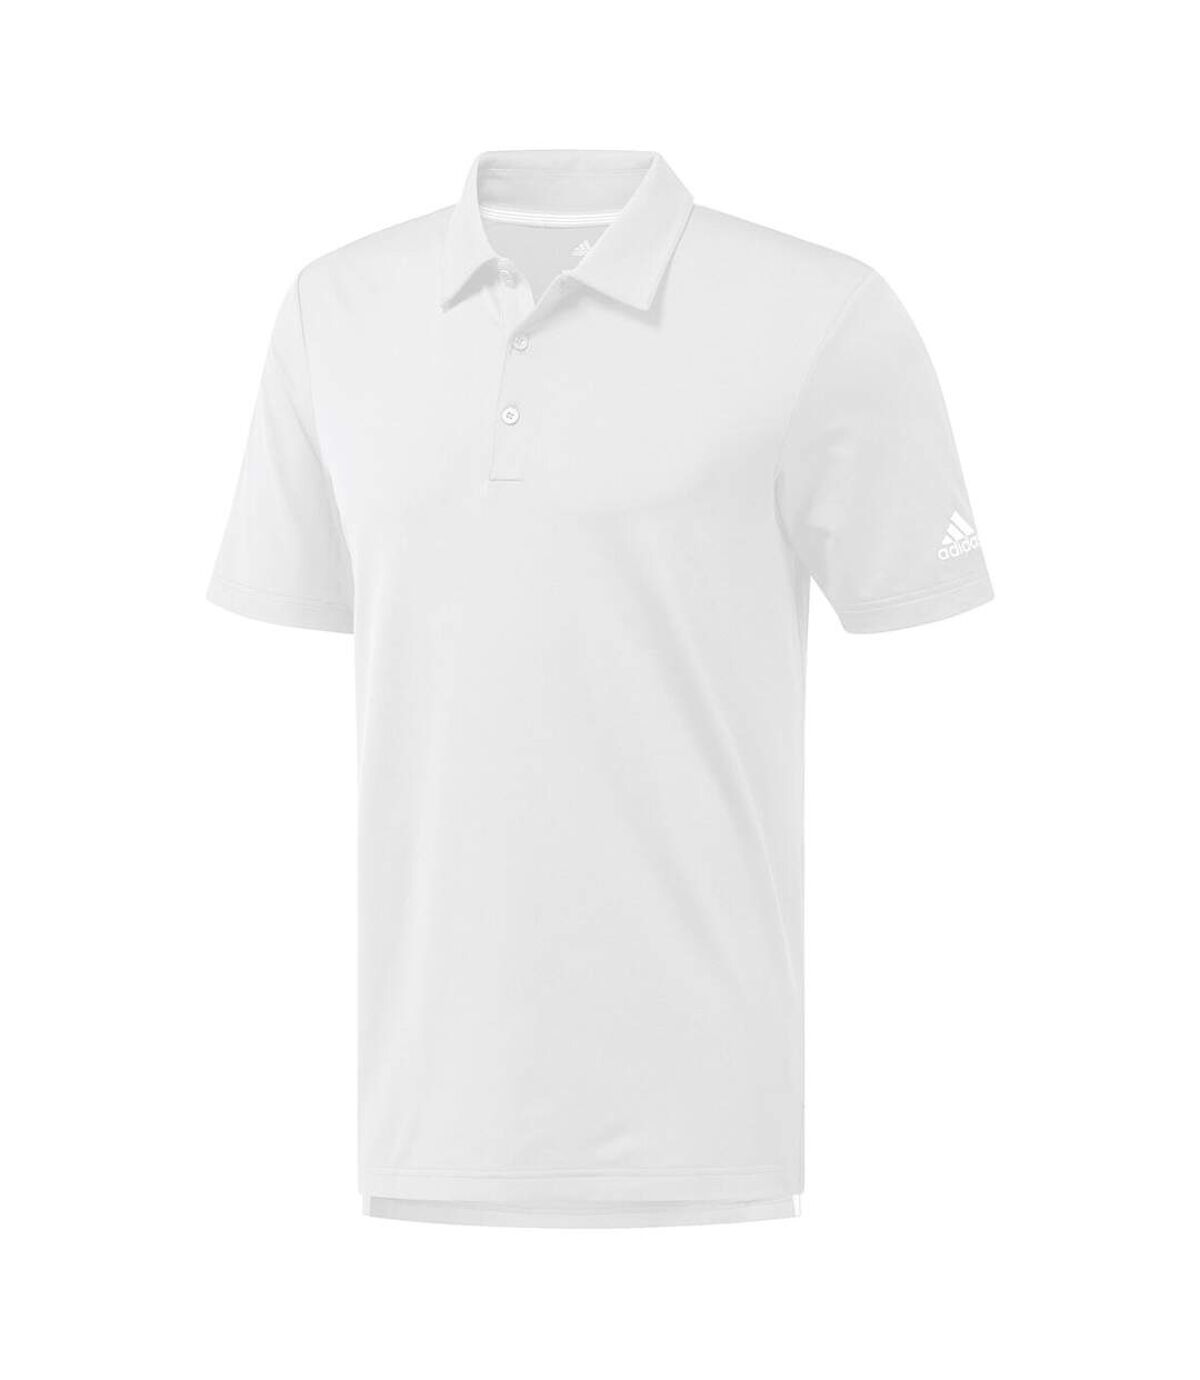 Adidas - Polo ULTIMATE 365 - Homme (Blanc) - UTRW6135